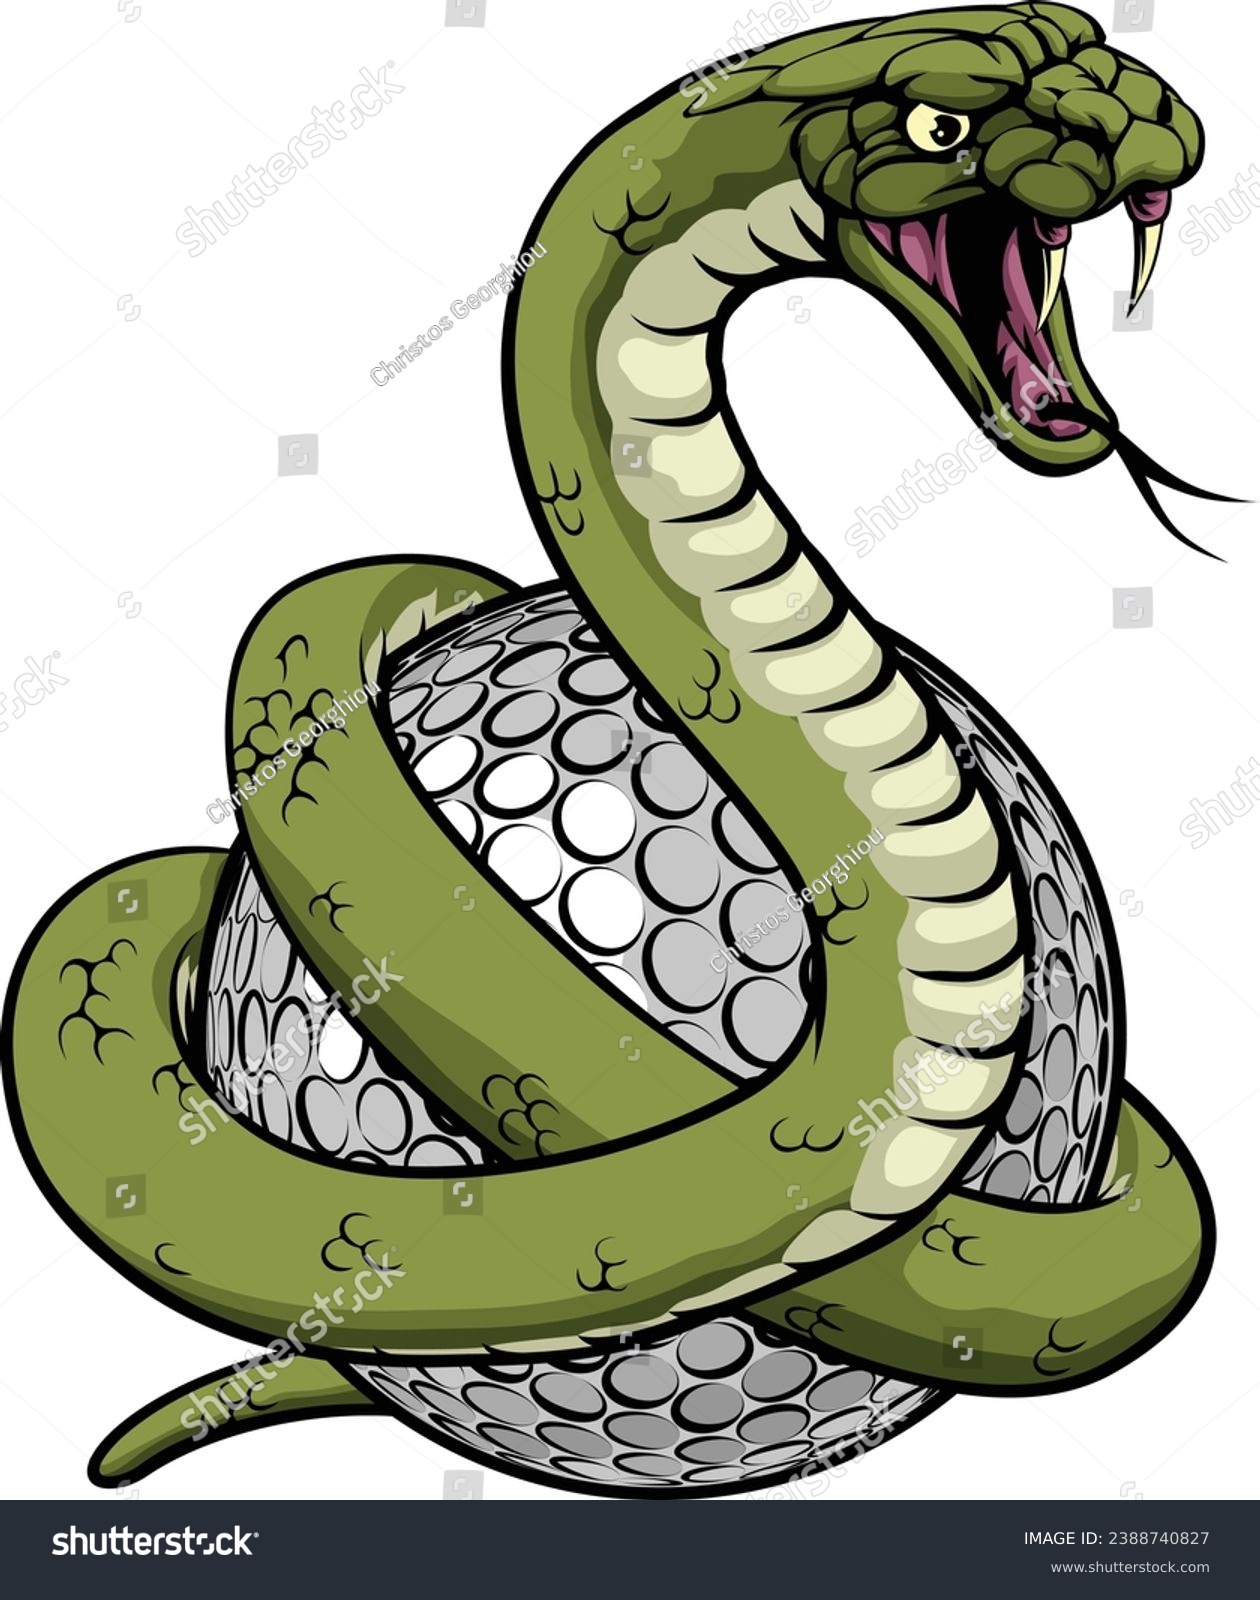 SVG of A snake golf ball sports team cartoon animal mascot svg